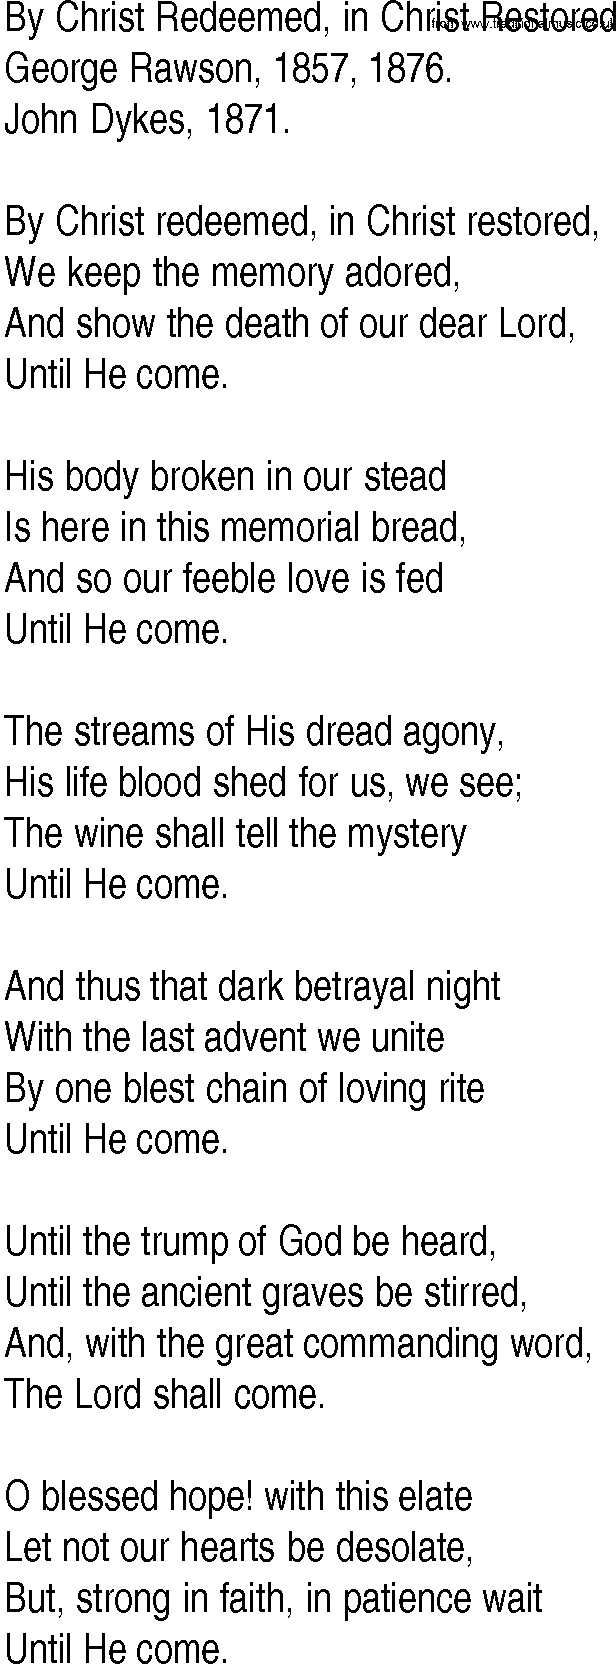 Hymn and Gospel Song: By Christ Redeemed, in Christ Restored by George Rawson lyrics